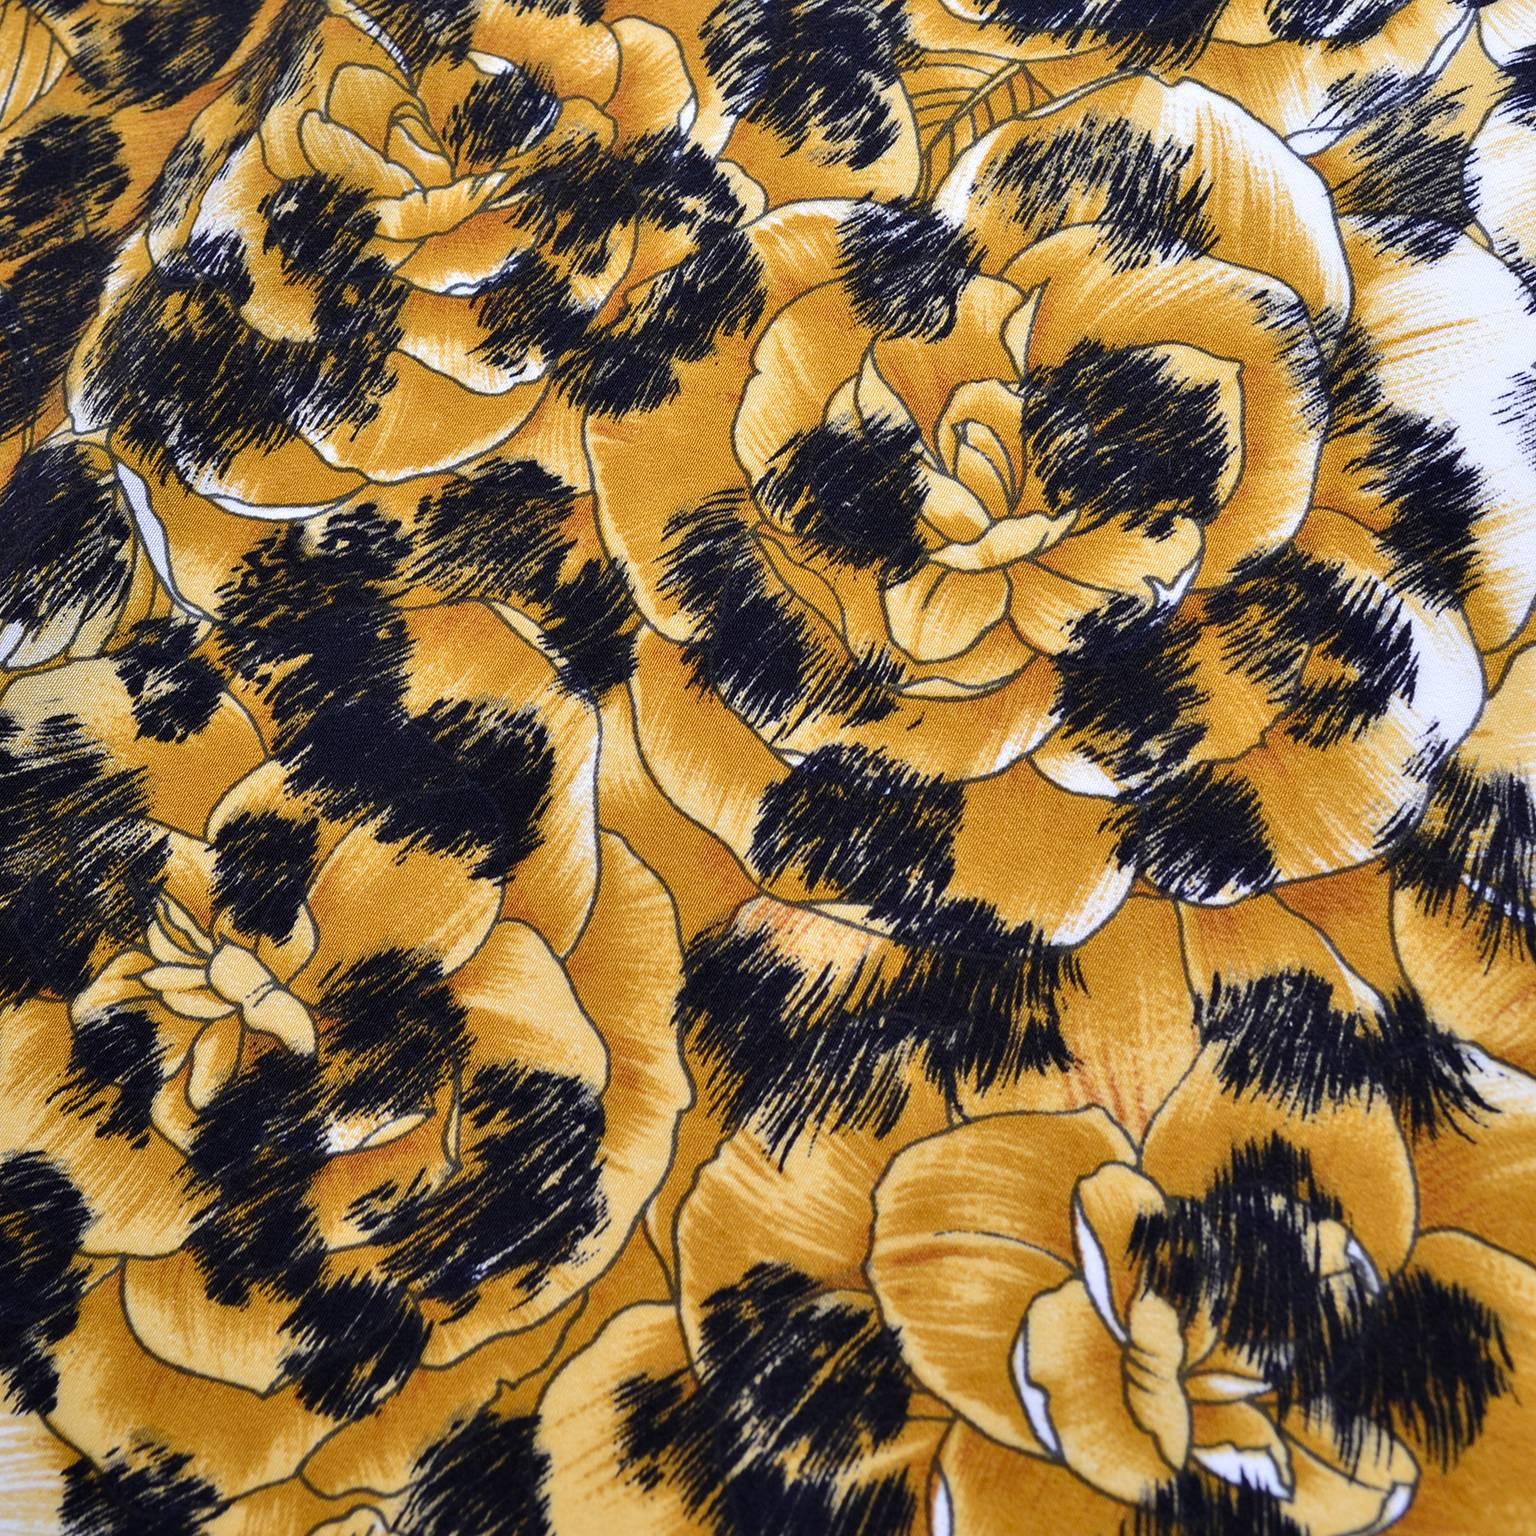 Brown Salvatore Ferragamo Vintage Silk Scarf in Leopard Jungle Print with Red Border